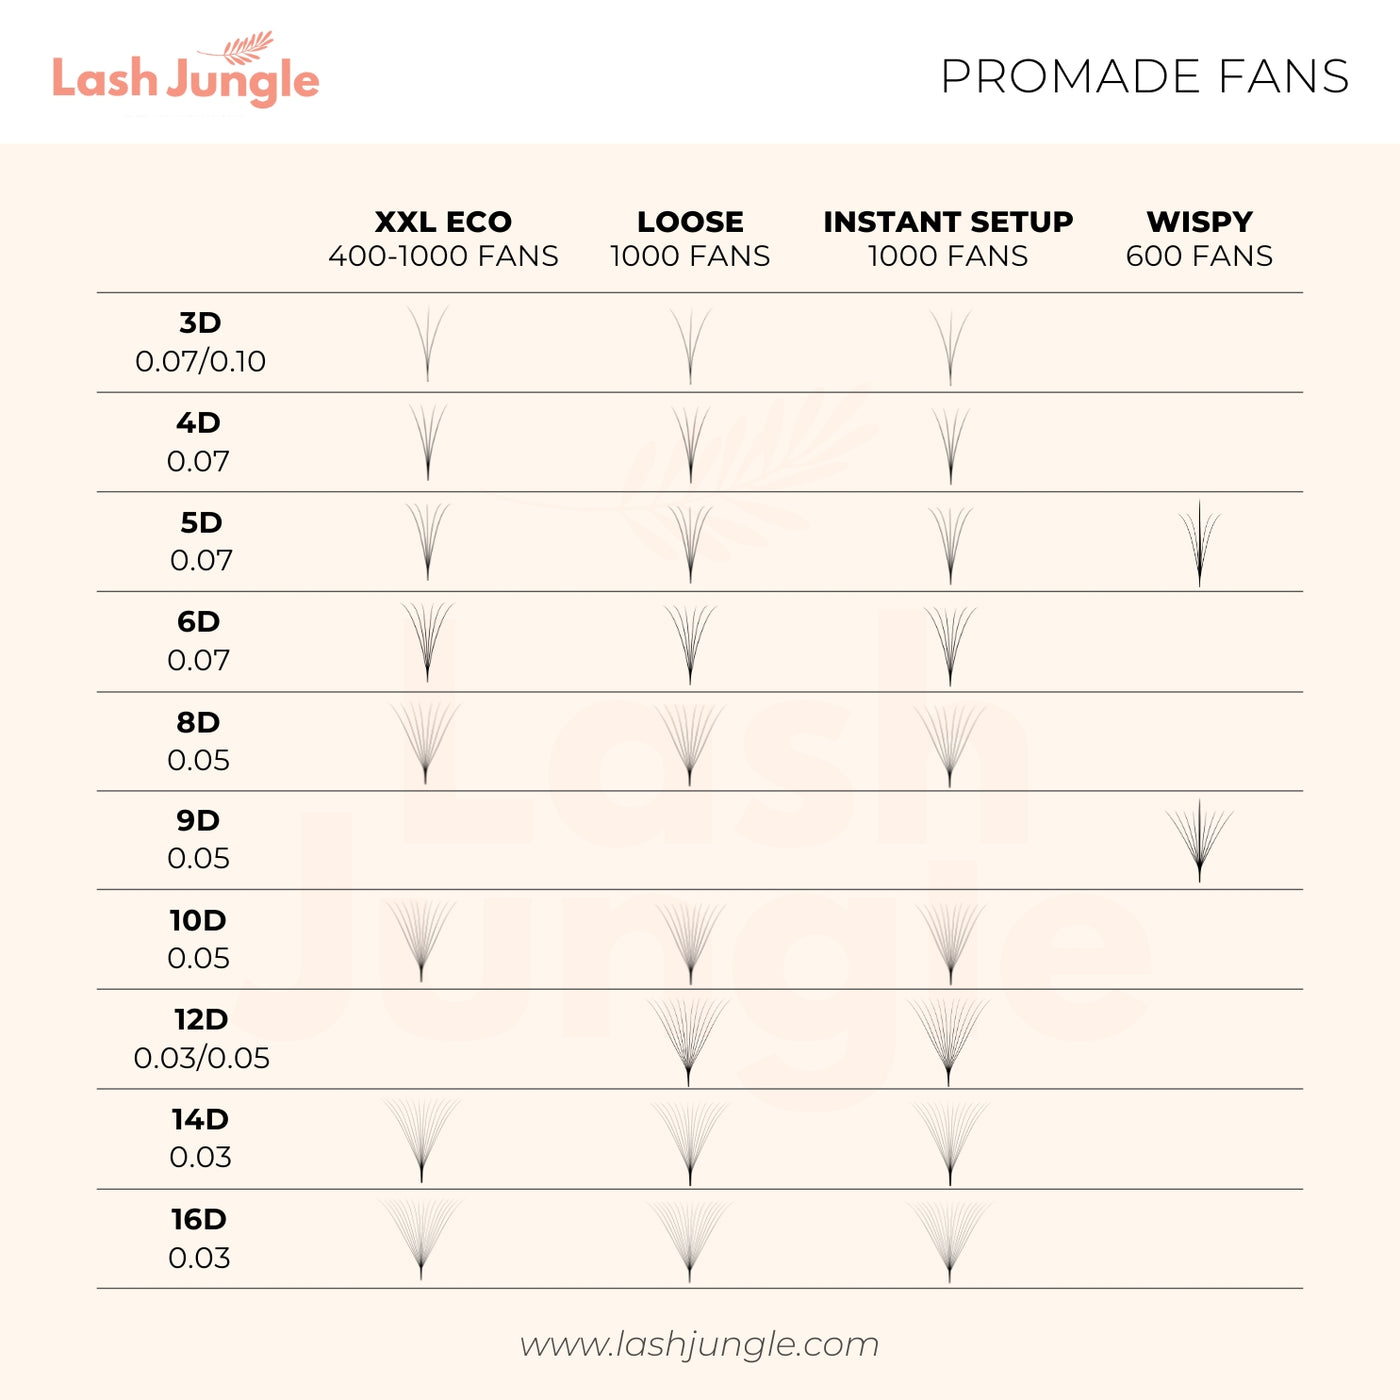 Lash Jungle Promade Fans range